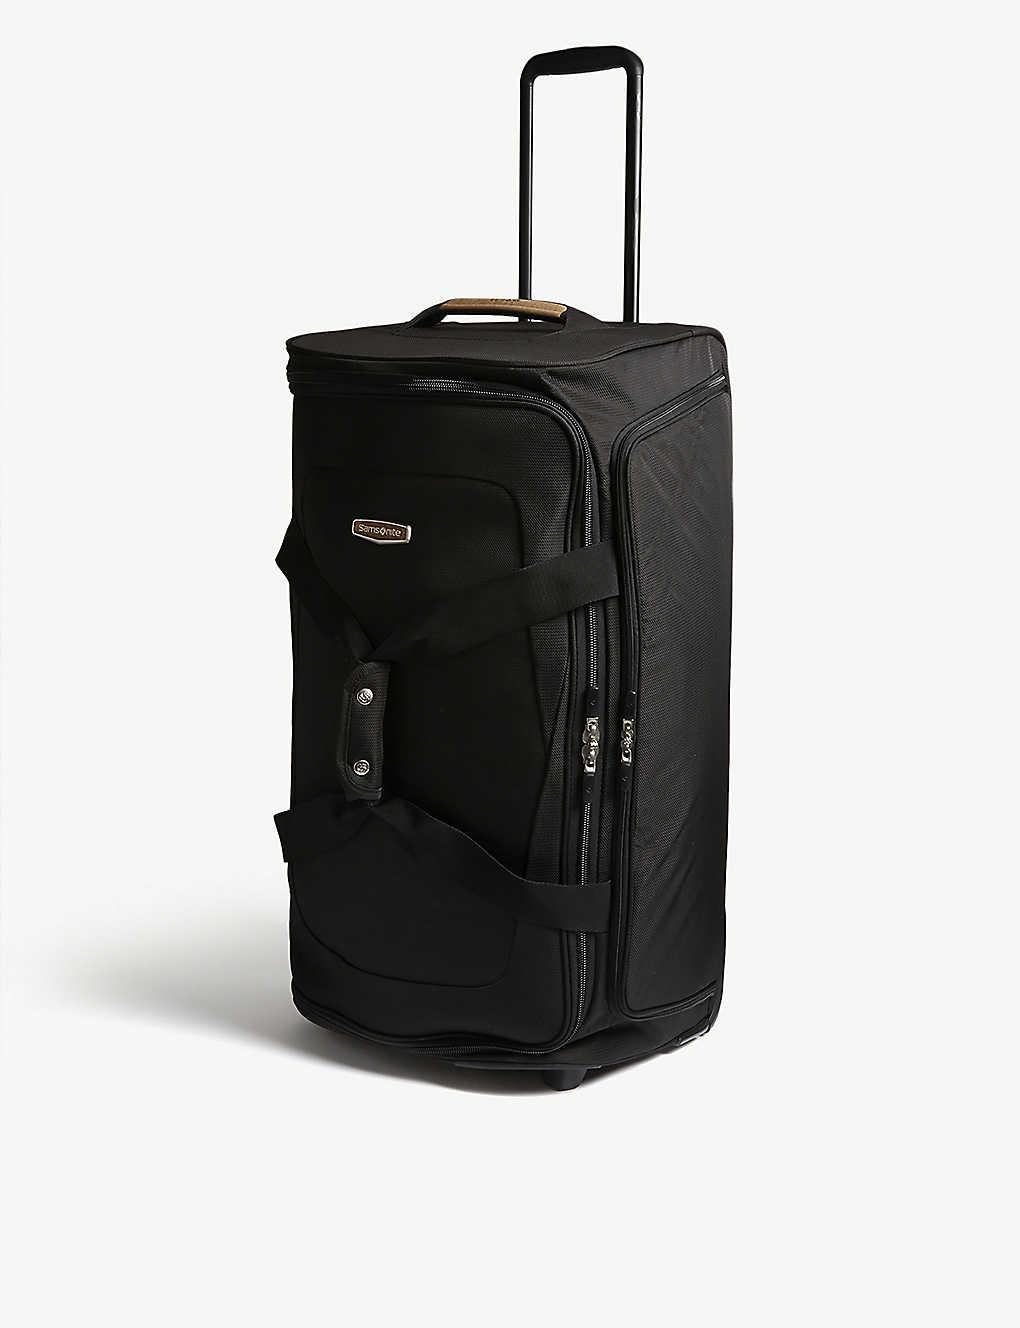 Samsonite Spark Sng Eco Two-wheel Duffle Bag 77cm in Black | Lyst